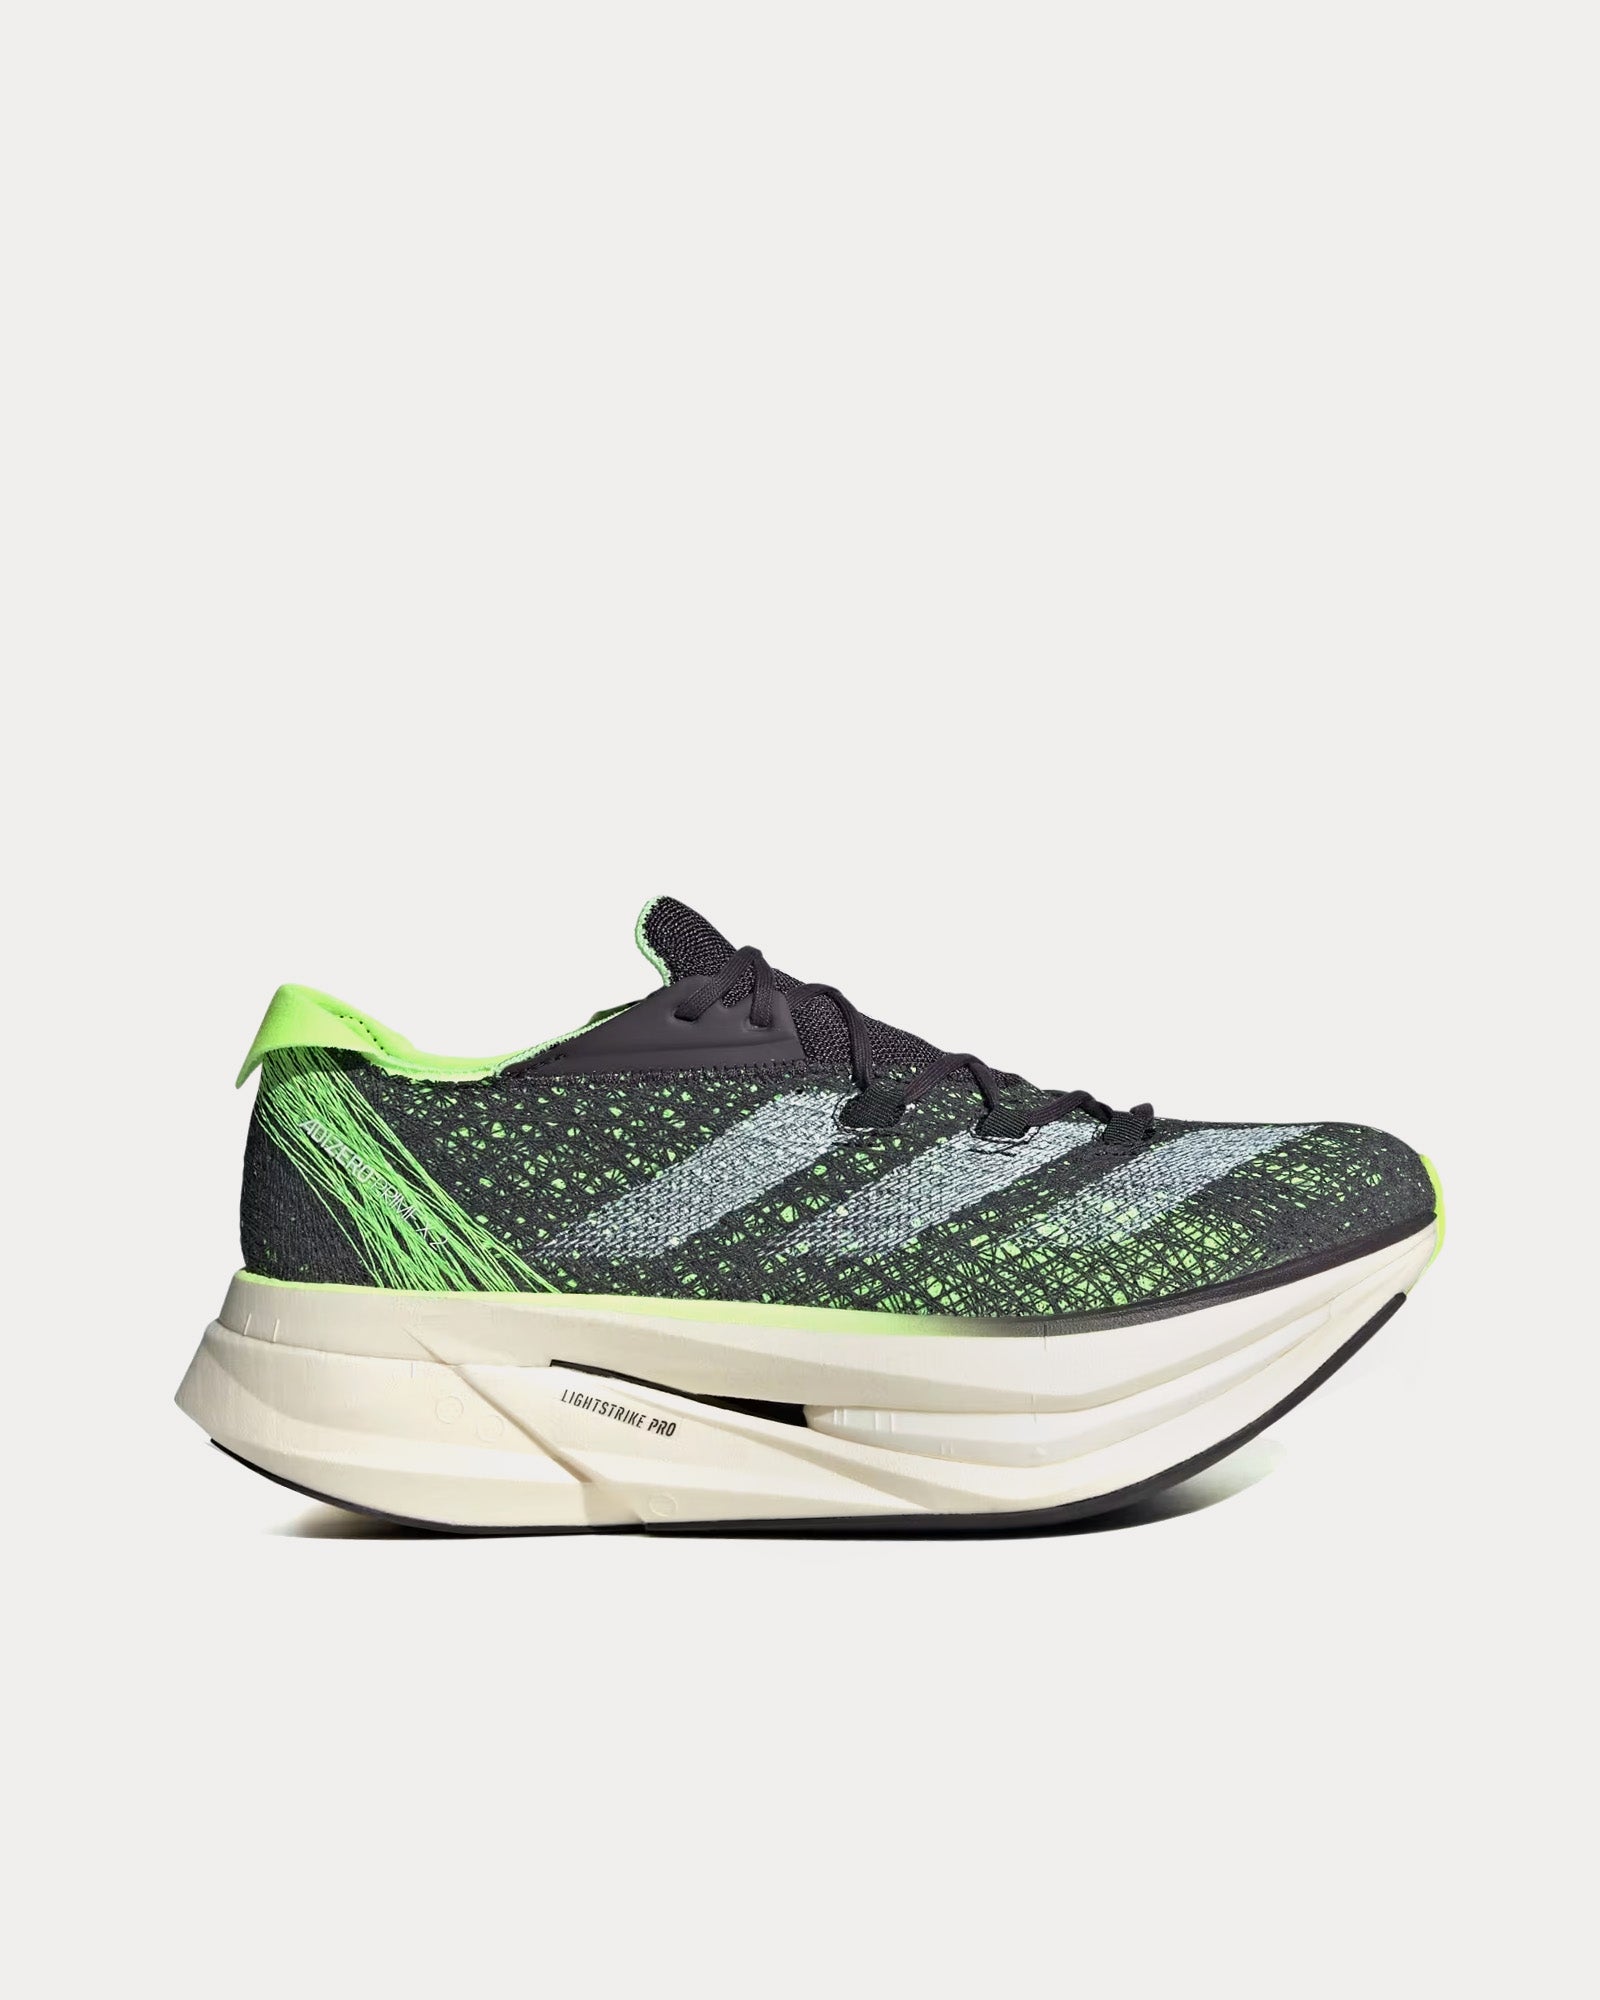 Adidas - Adizero Prime X 2.0 Aurora Black / Zero Metalic / Green Spark Running Shoes